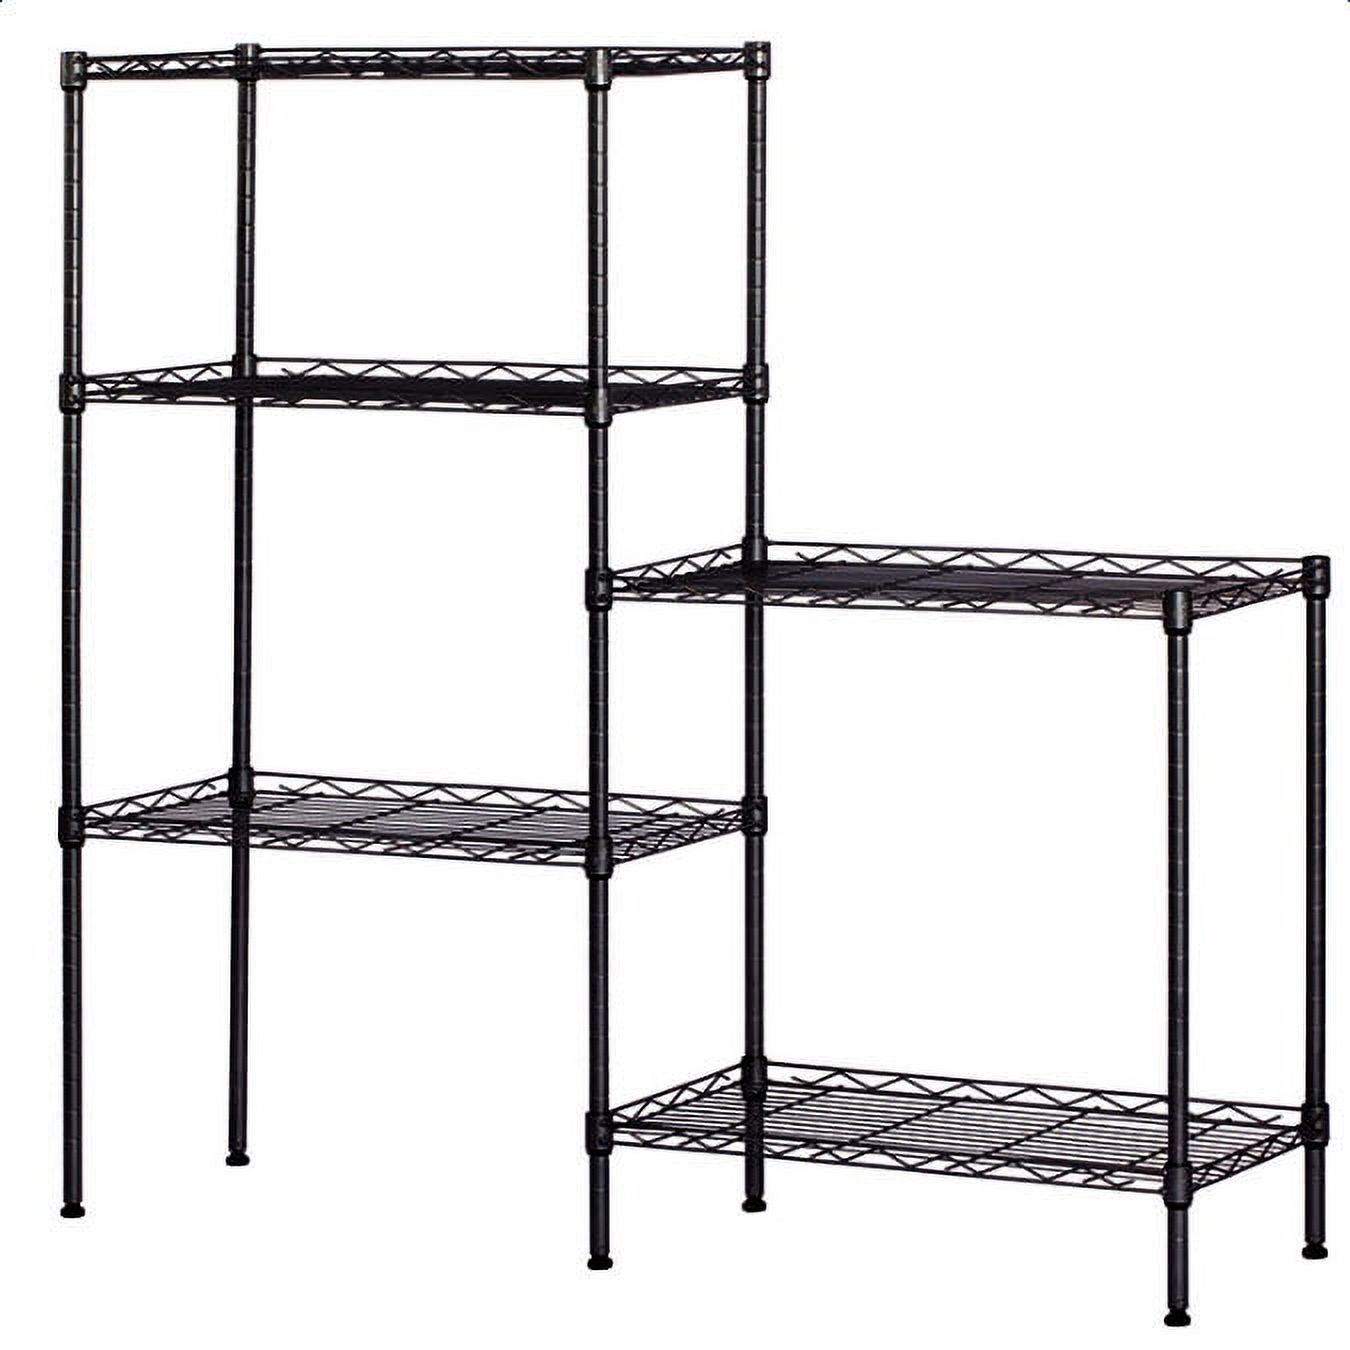 5 Tier Shelf Metal Storage Racks and Shelving Rack, Wire Storage Shelves for Garage Metal Storage Shelving, Black Epoxy Steel Wire Shelving Unit and Storage, (21.25 x 11.42 x 59.06)", S10121 - image 2 of 7